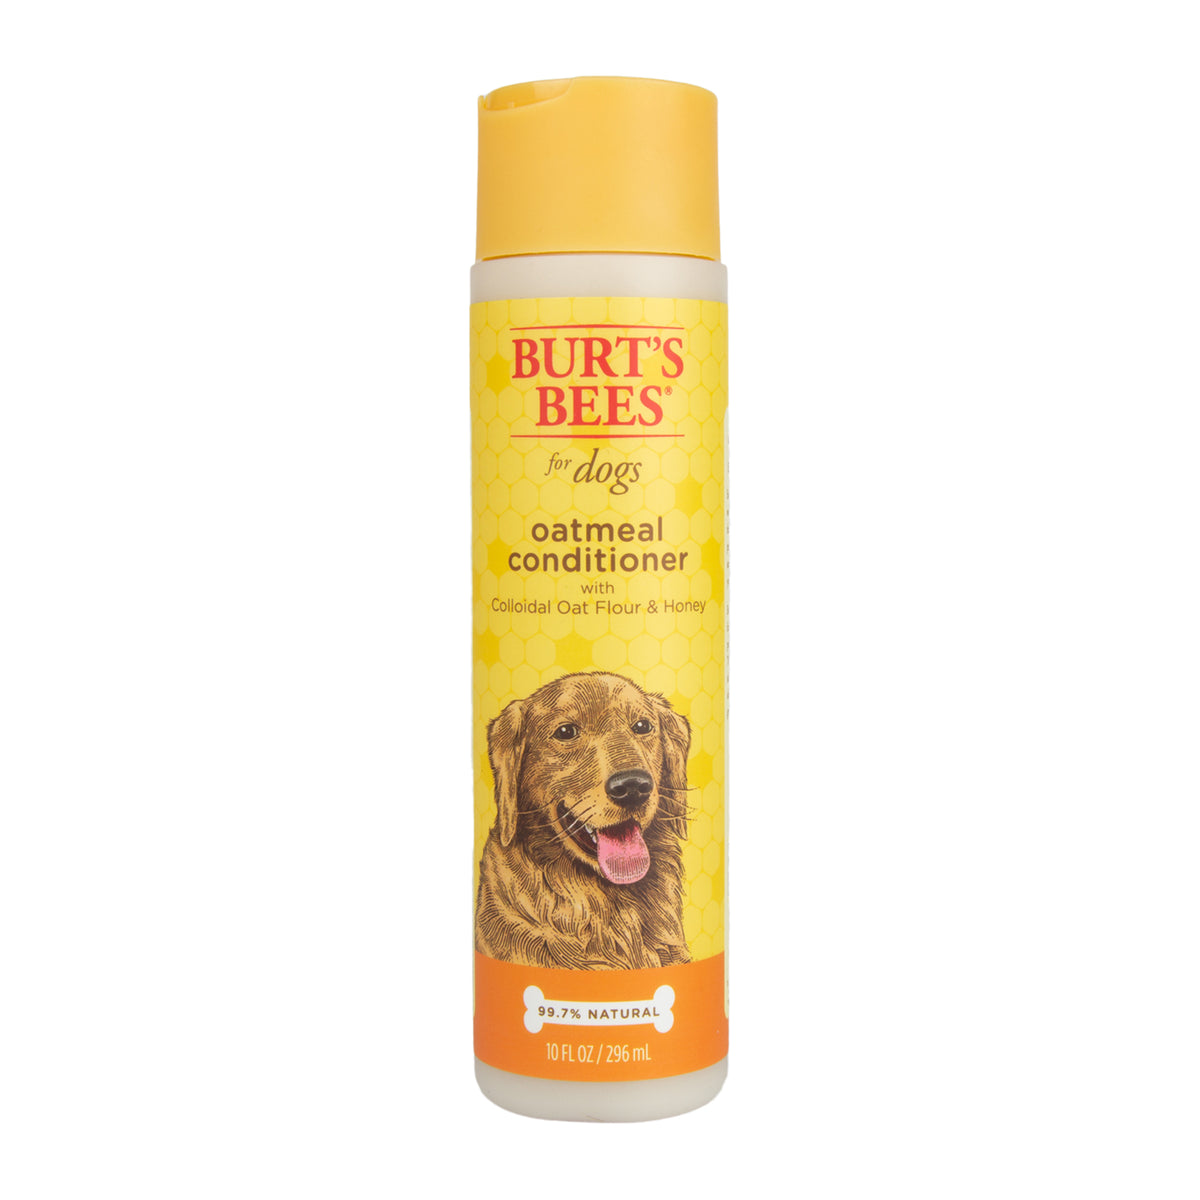 Burt's Bees Oatmeal Dog Conditioner 296ml